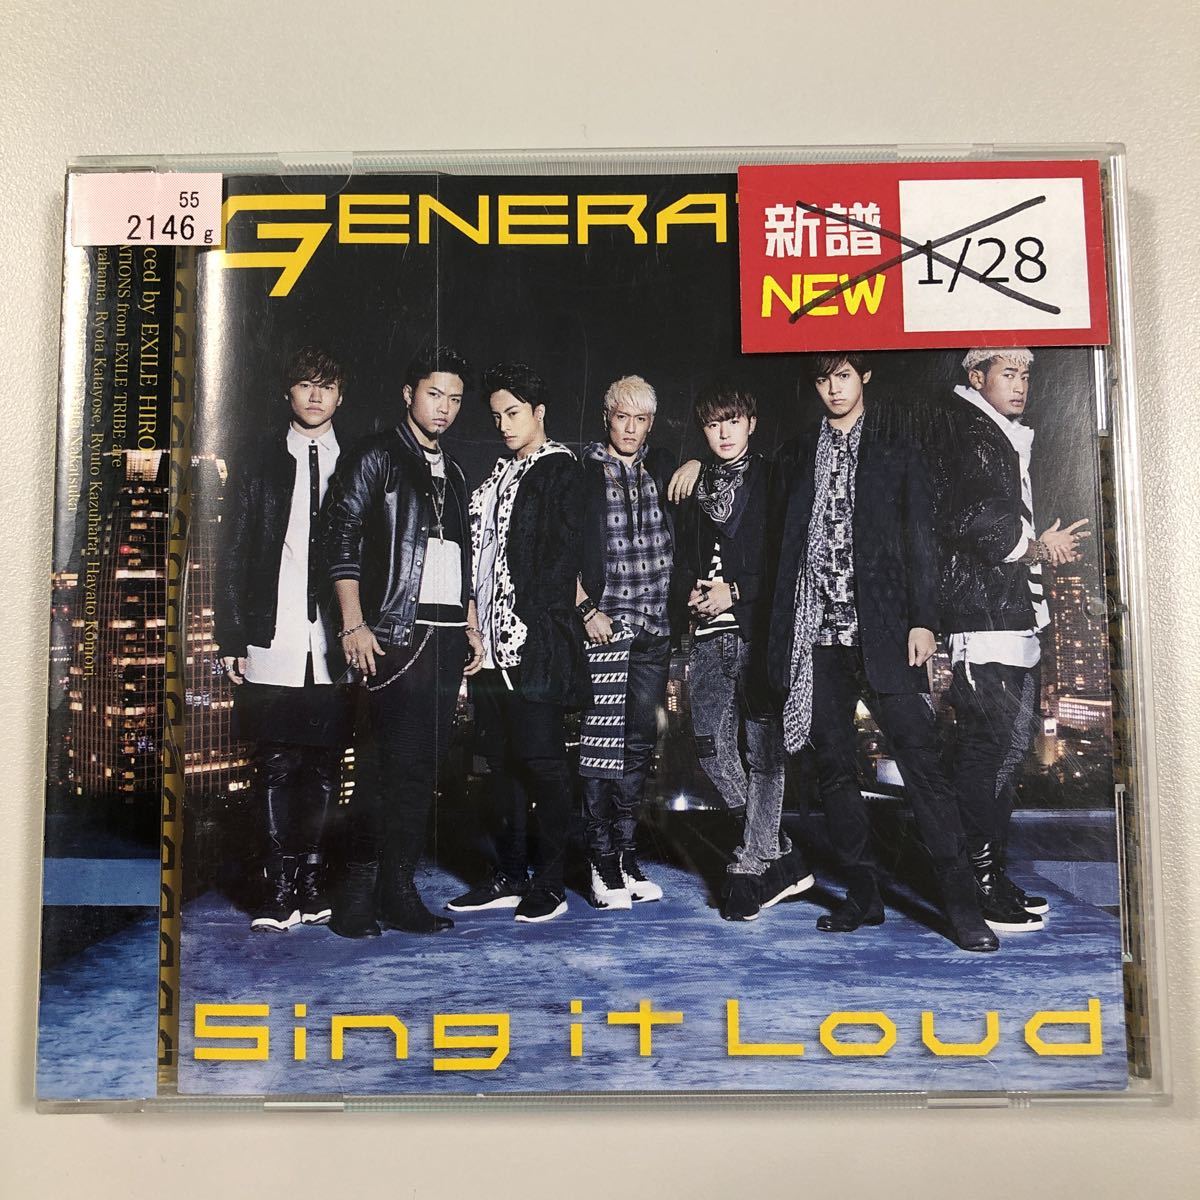 GENERATIONS Sing it Loud 直筆サイン入りCD+DVD - cna.gob.bo